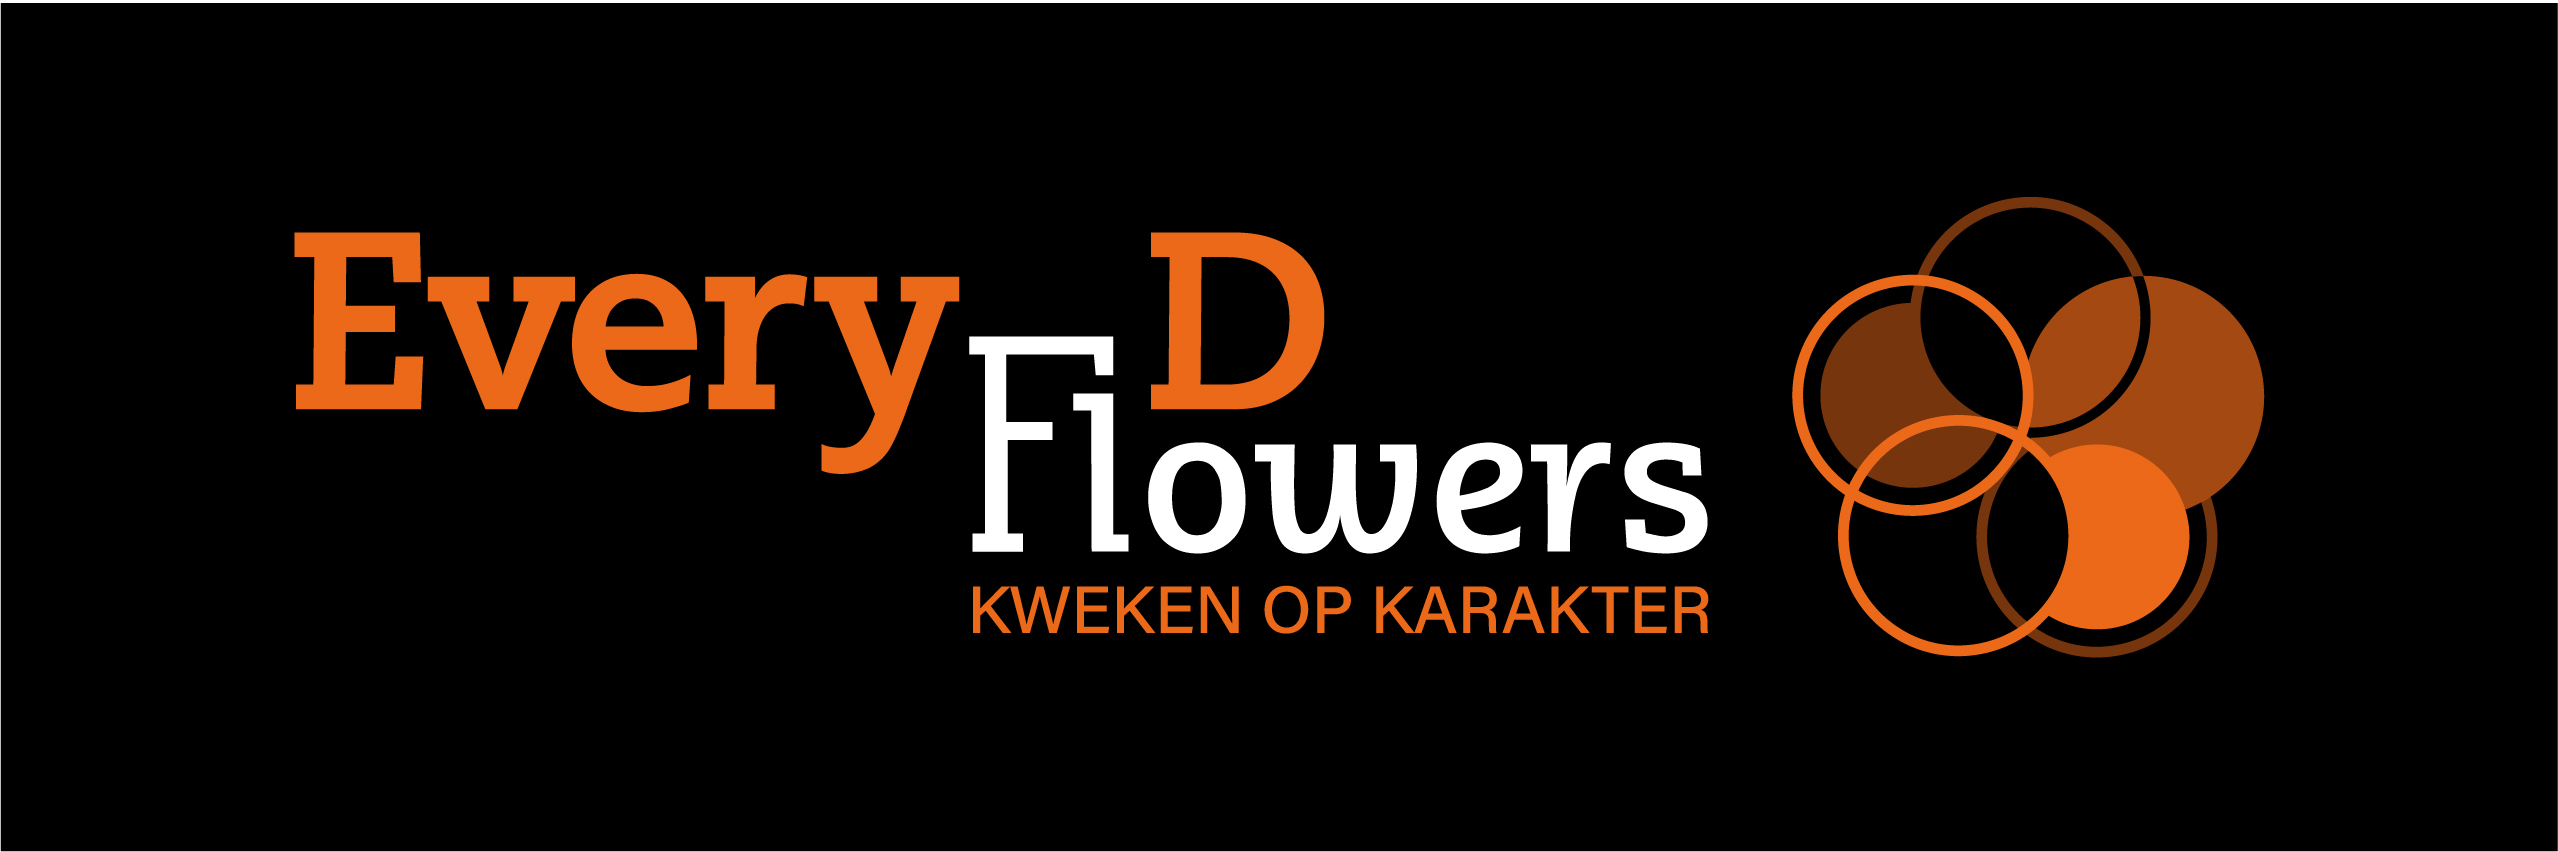 Every D flowers logo